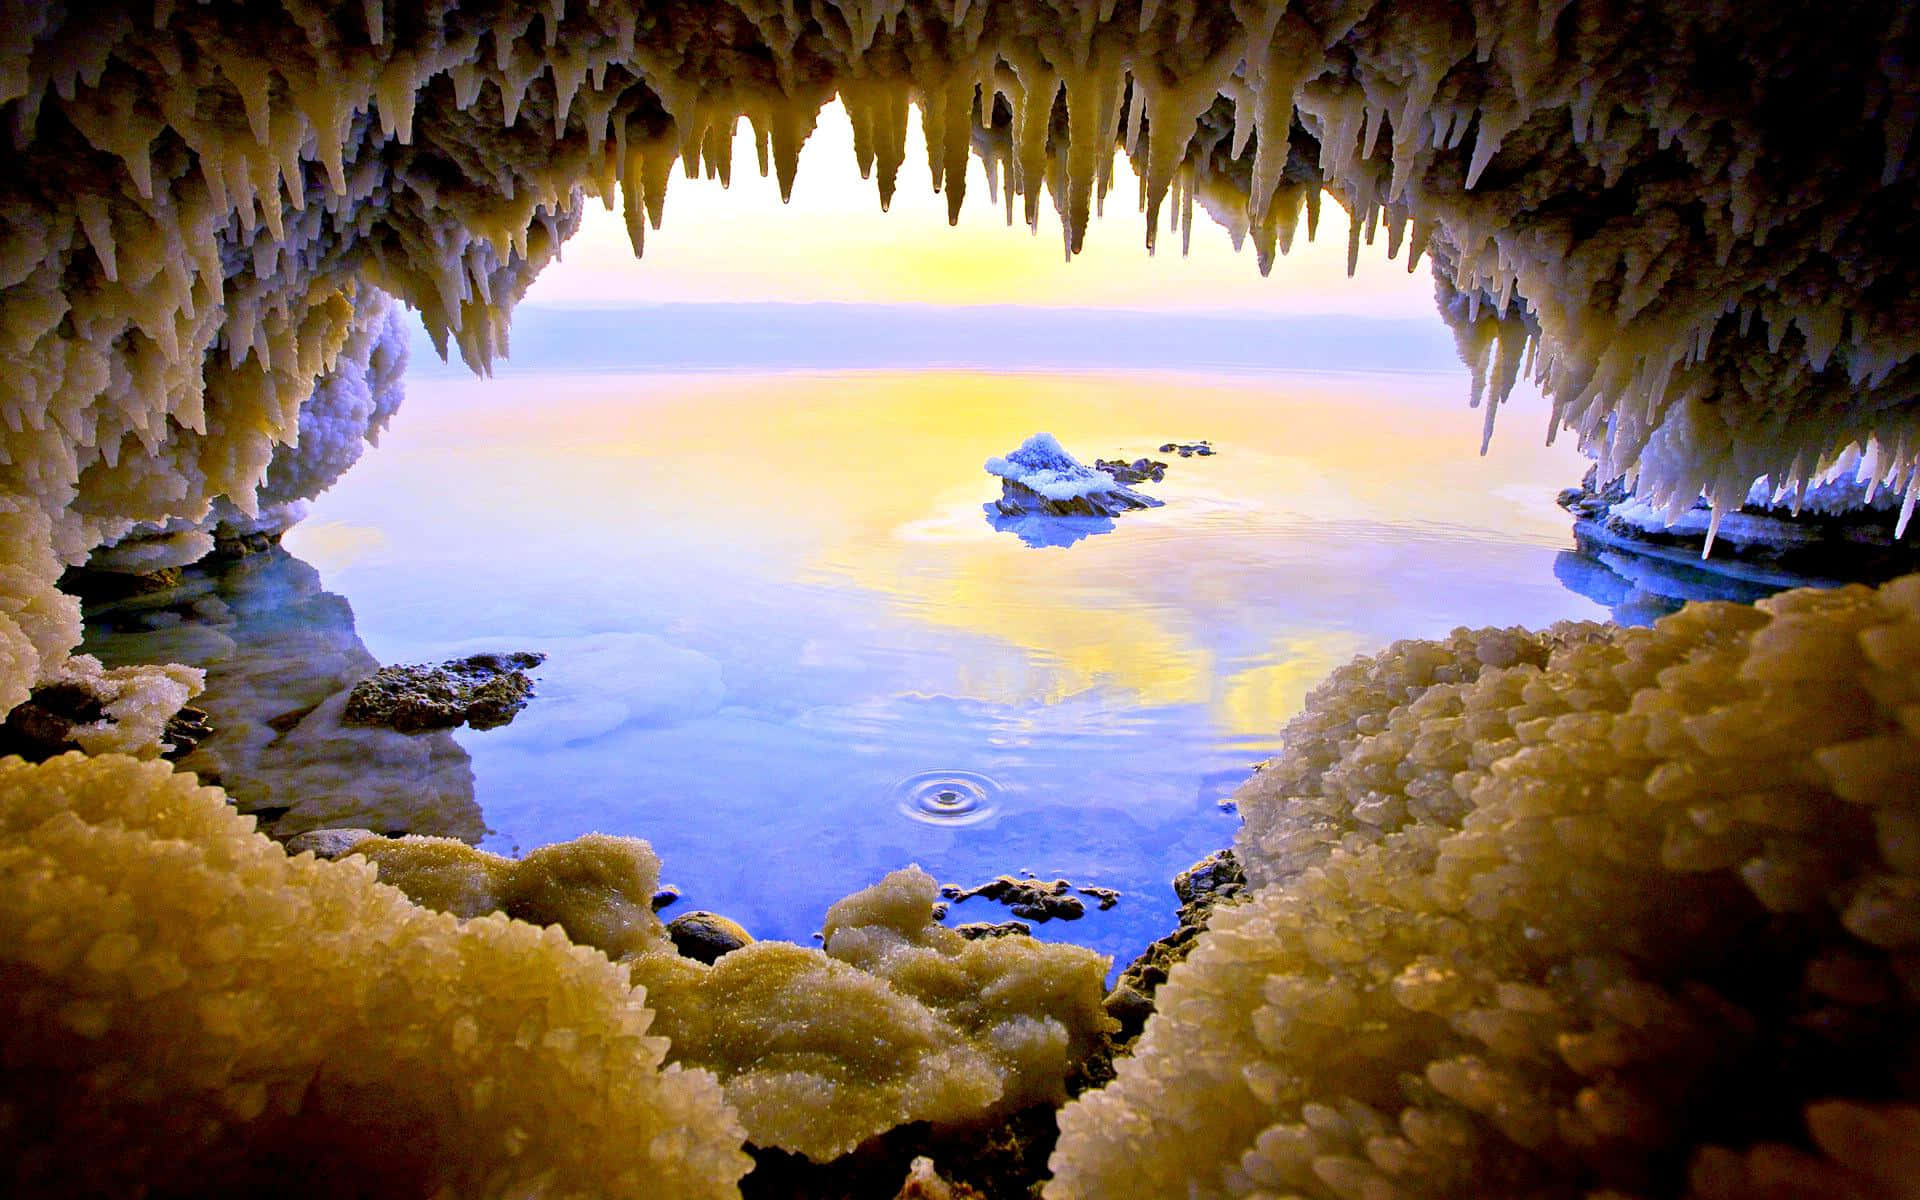 Mystical views inside a Stalactite Salt Cave in Dead Sea. Wallpaper